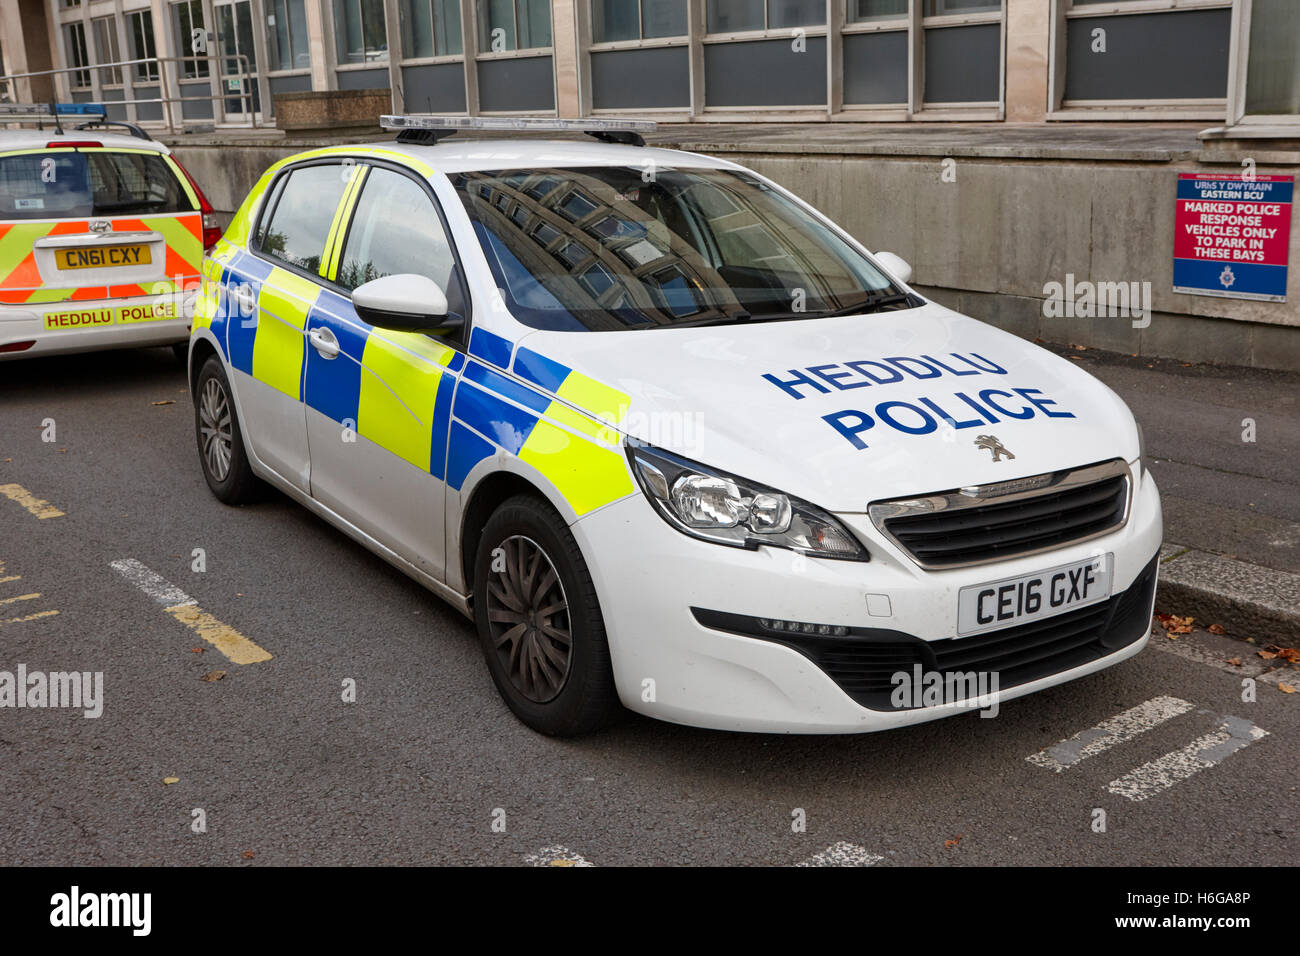 south wales police heddlu bilingual peugeot 308 vehicle livery Cardiff Wales United Kingdom Stock Photo